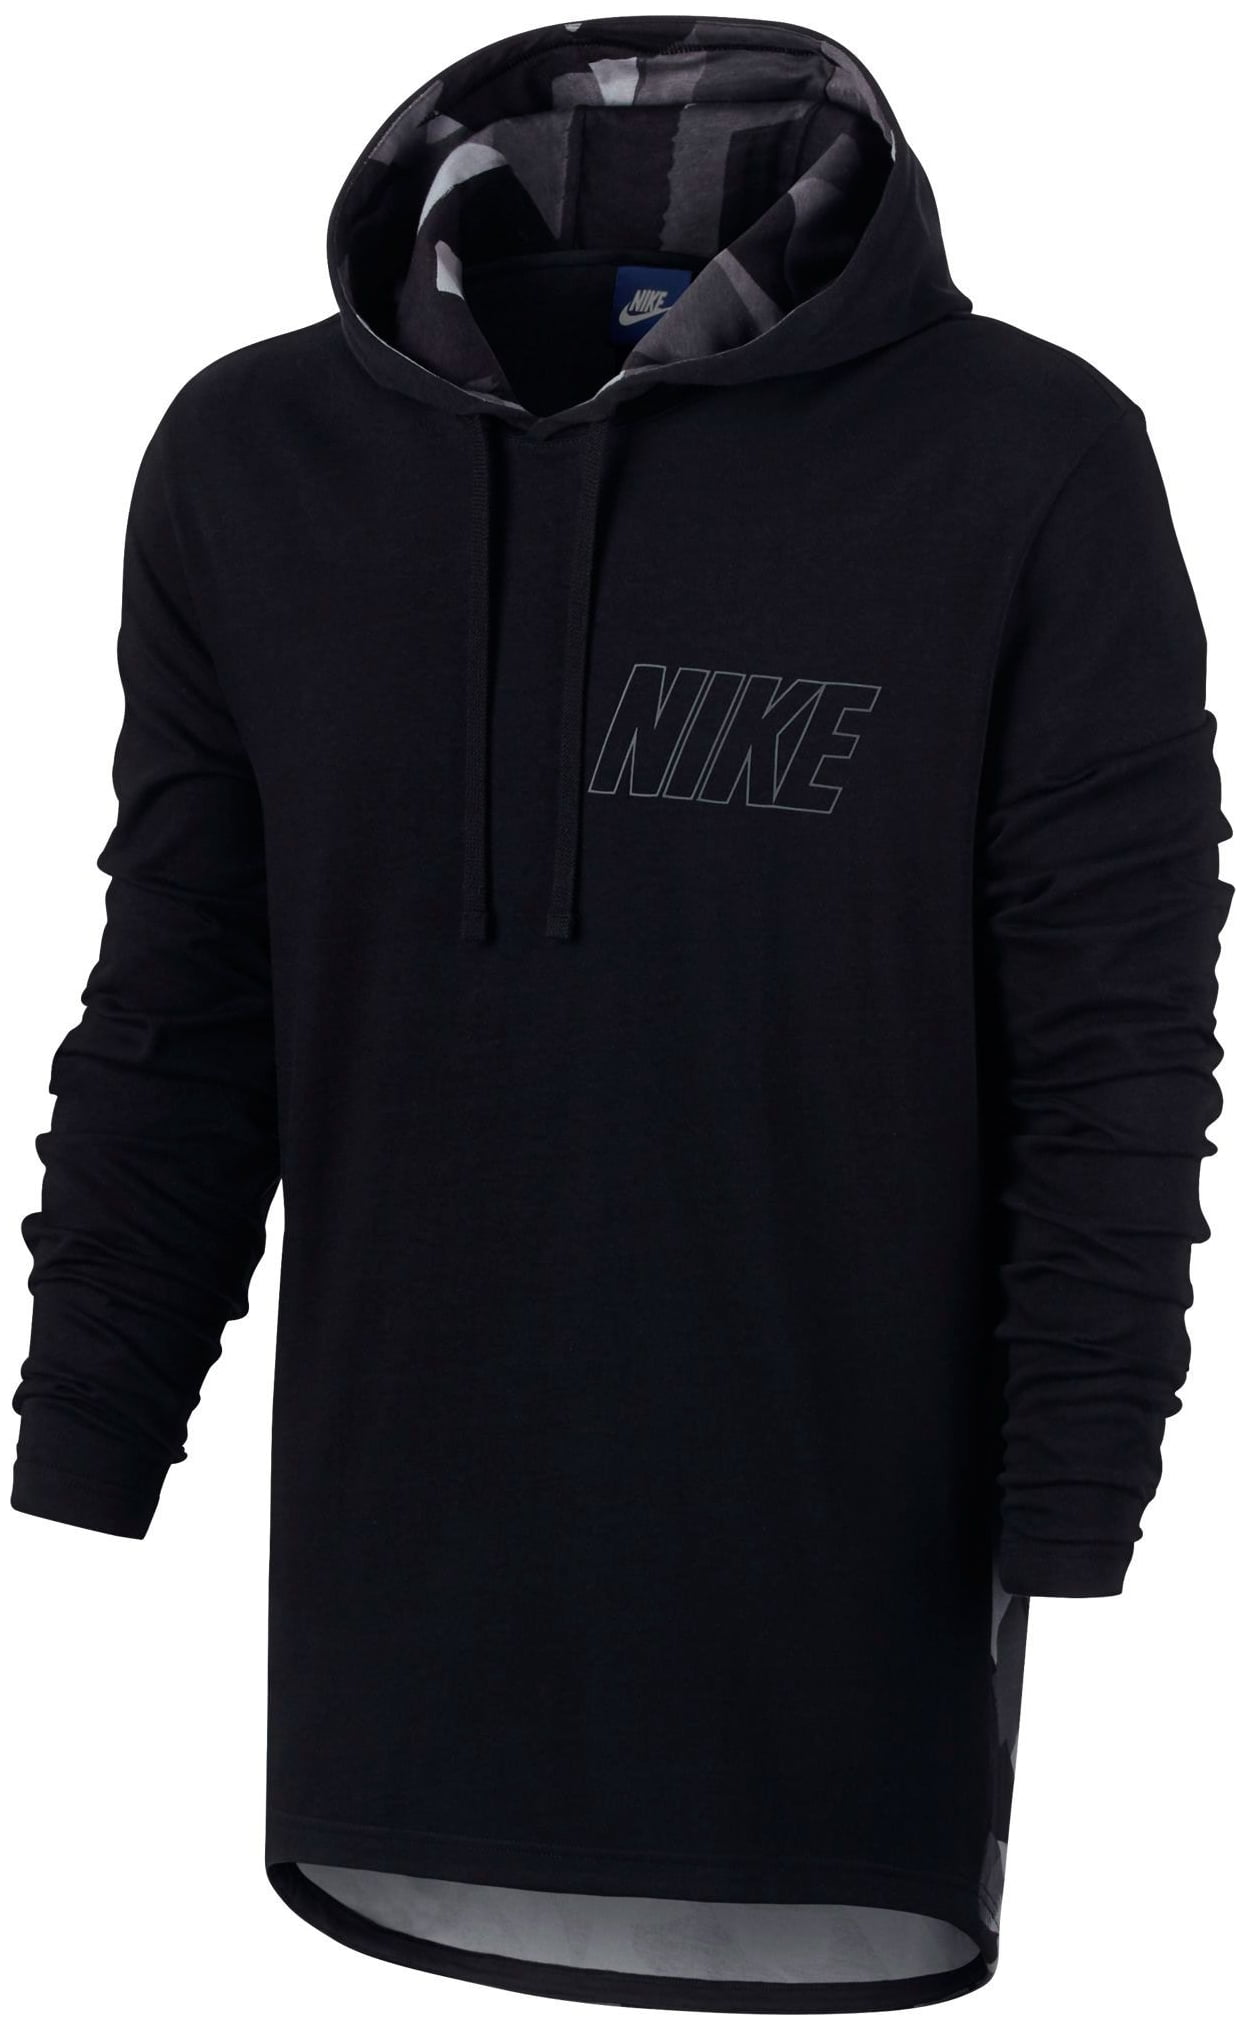 Nike Men's Sportswear Hoodie (Black, XXL) - Walmart.com